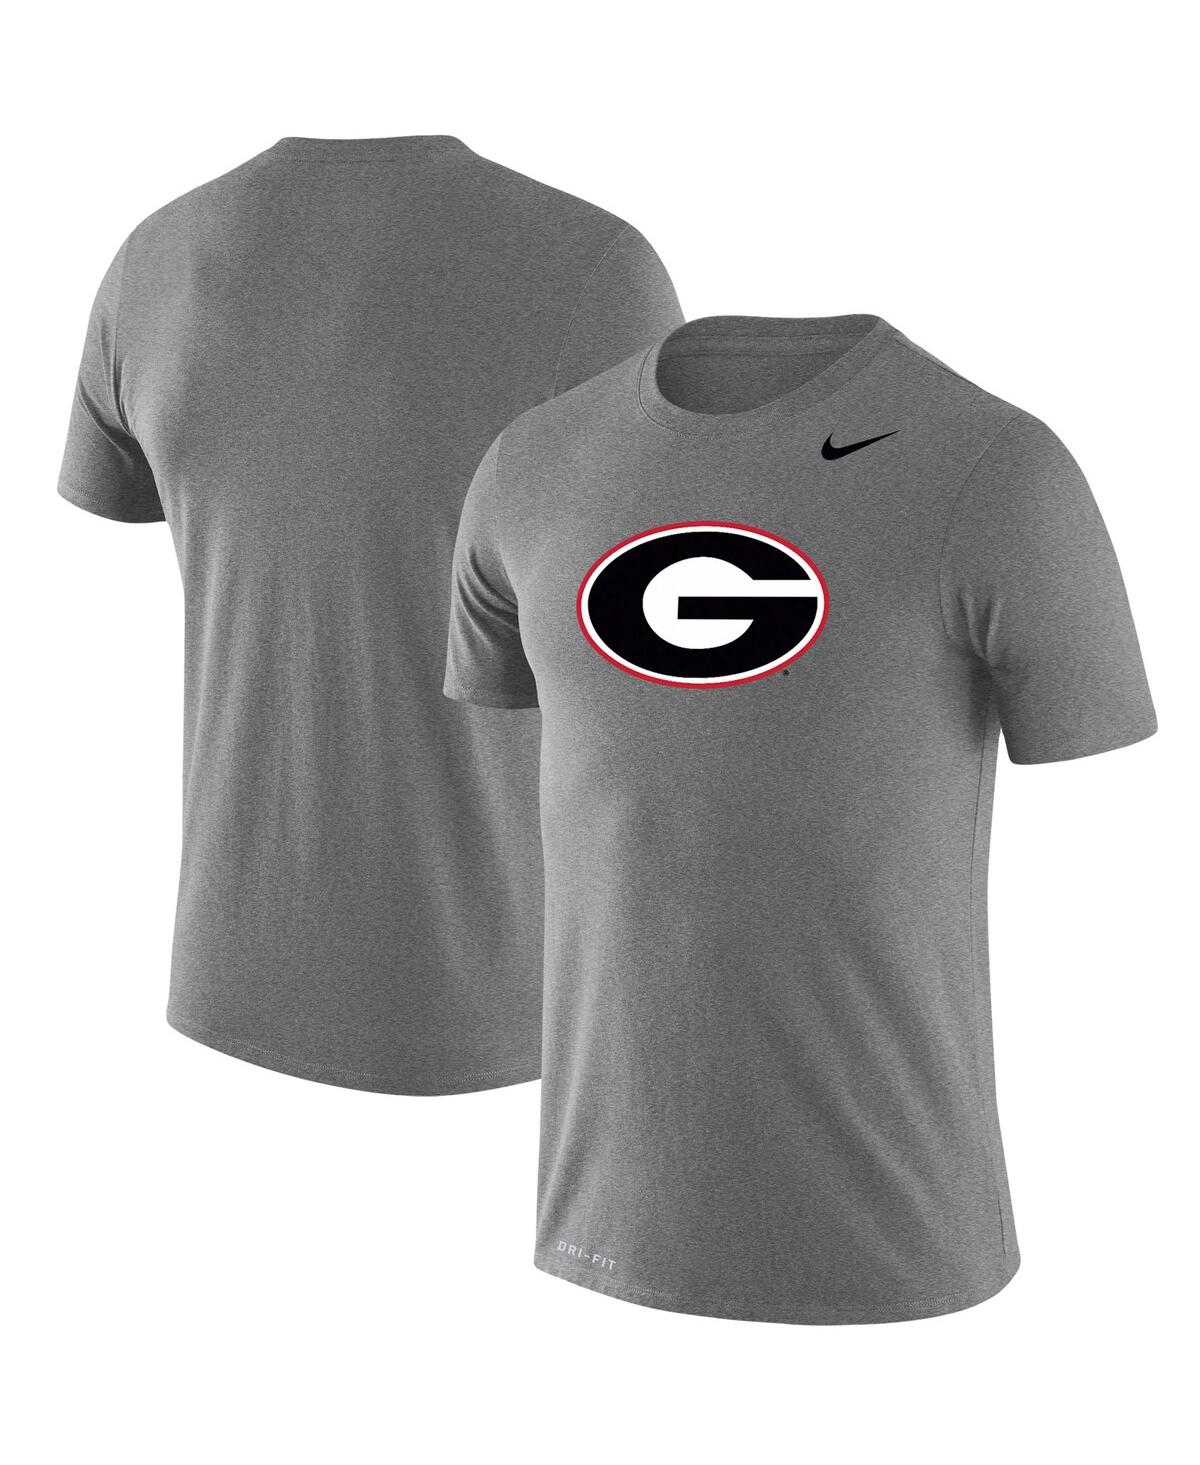 Men's Nike Heathered Gray Georgia Bulldogs School Logo Legend Performance T-shirt